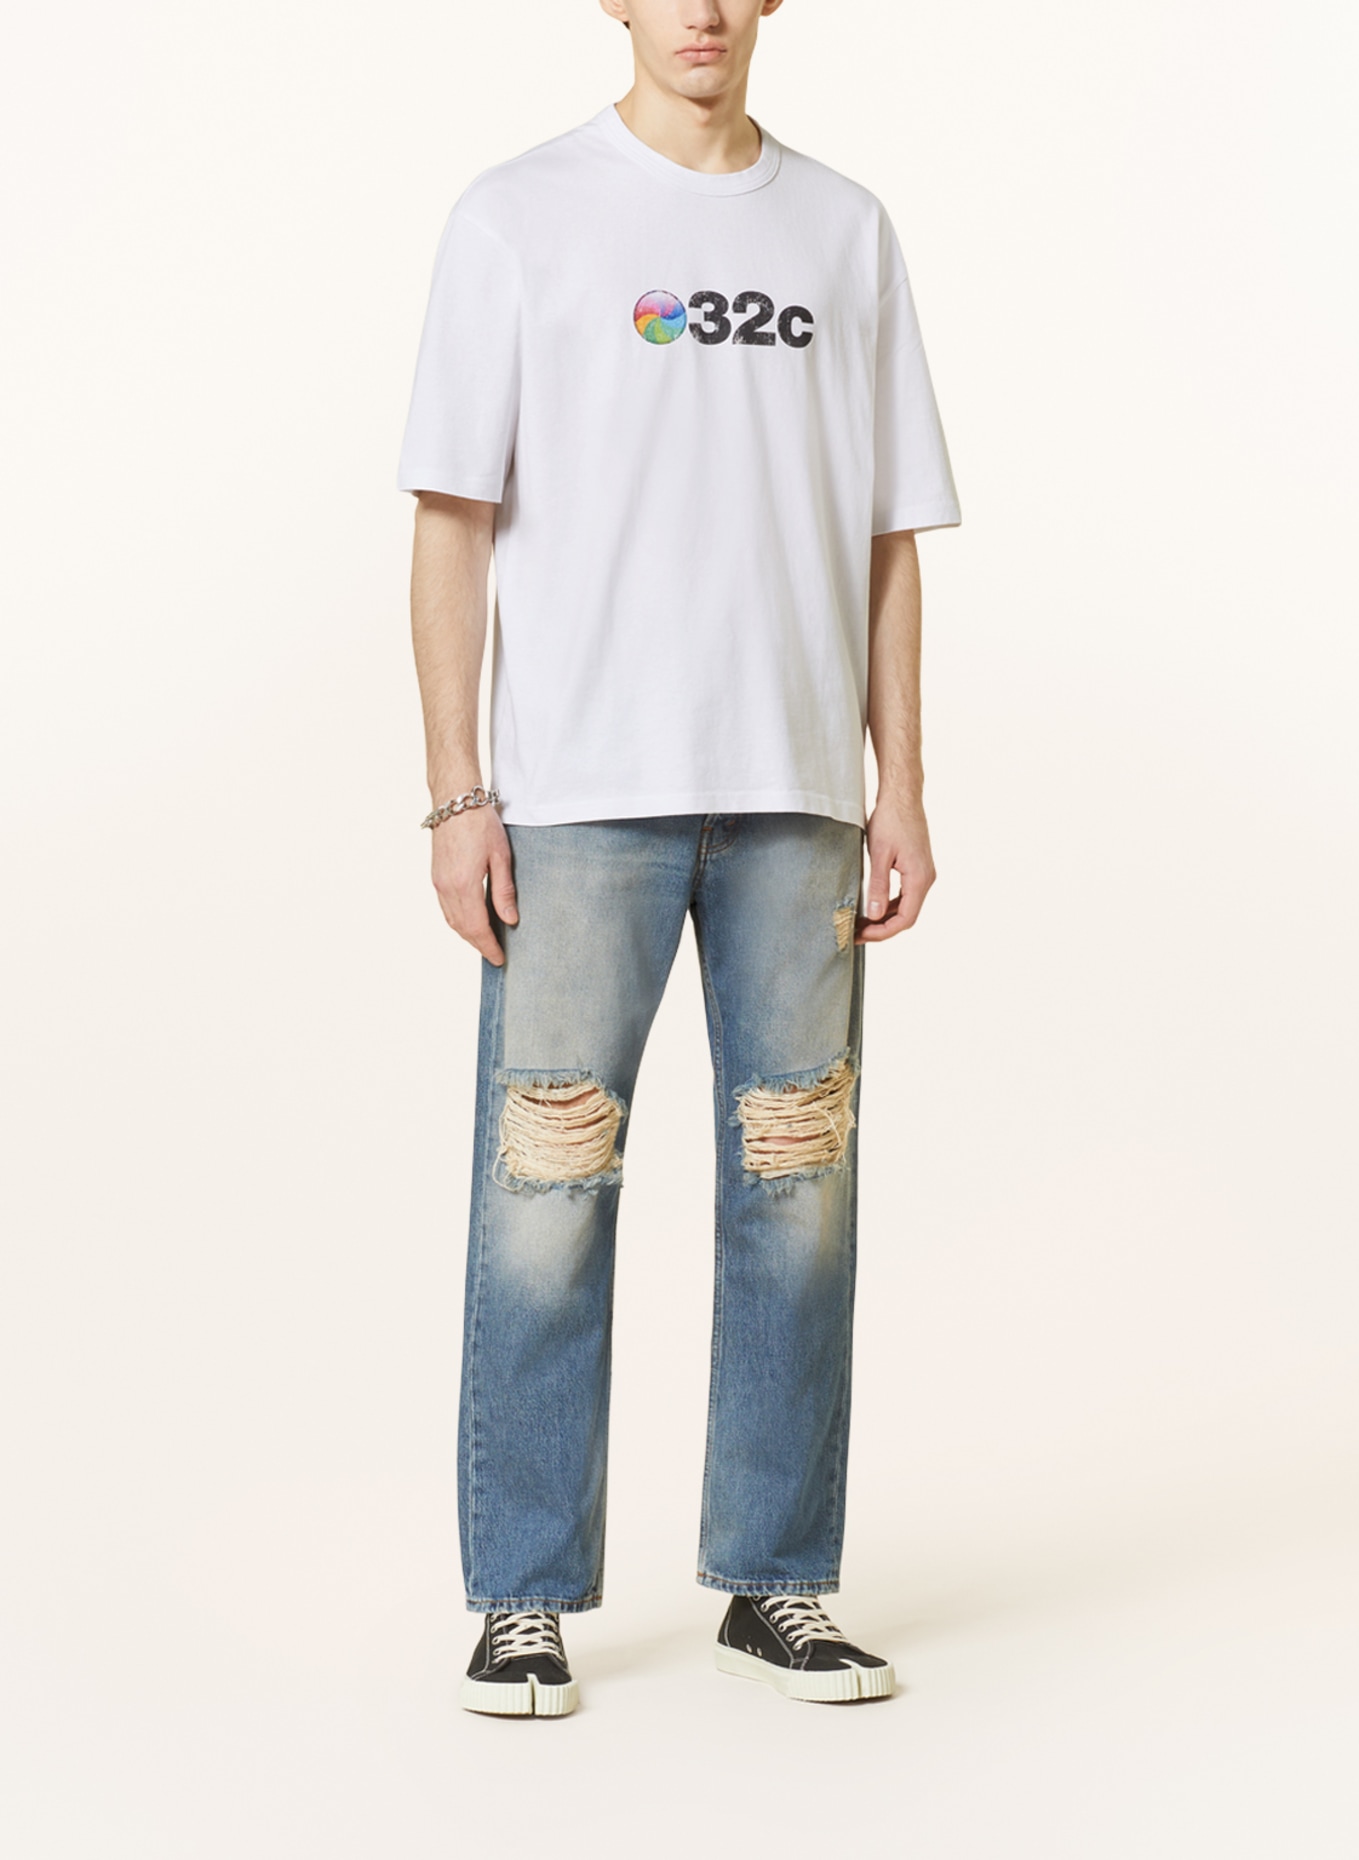 032c Oversized-Shirt, Farbe: WEISS (Bild 2)